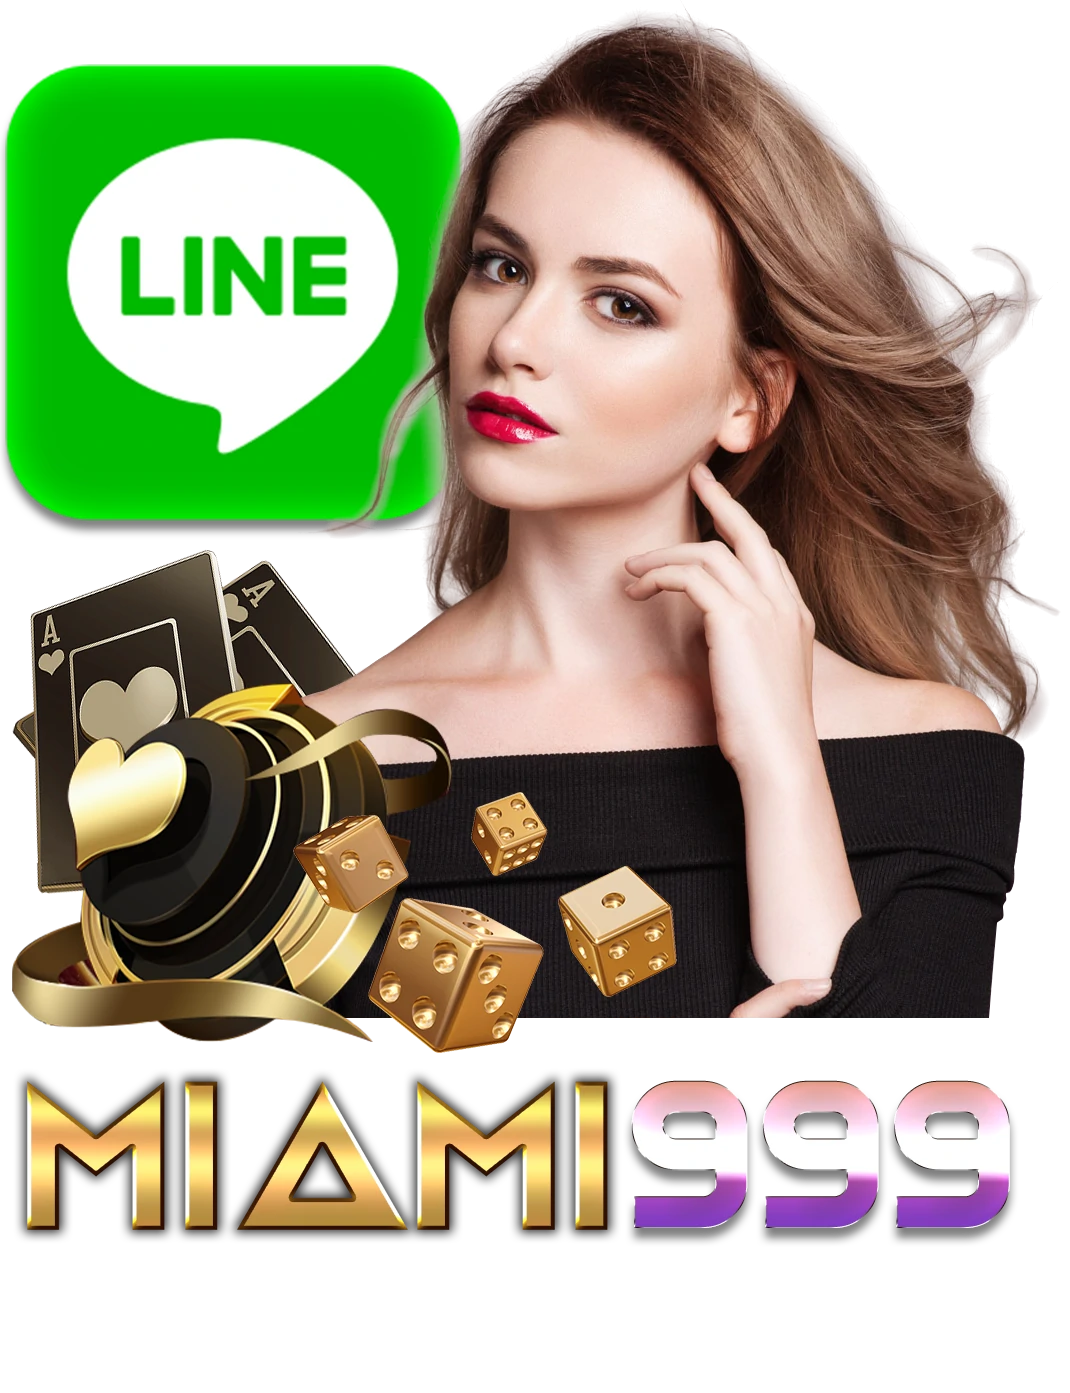 Miami999-logoPNG